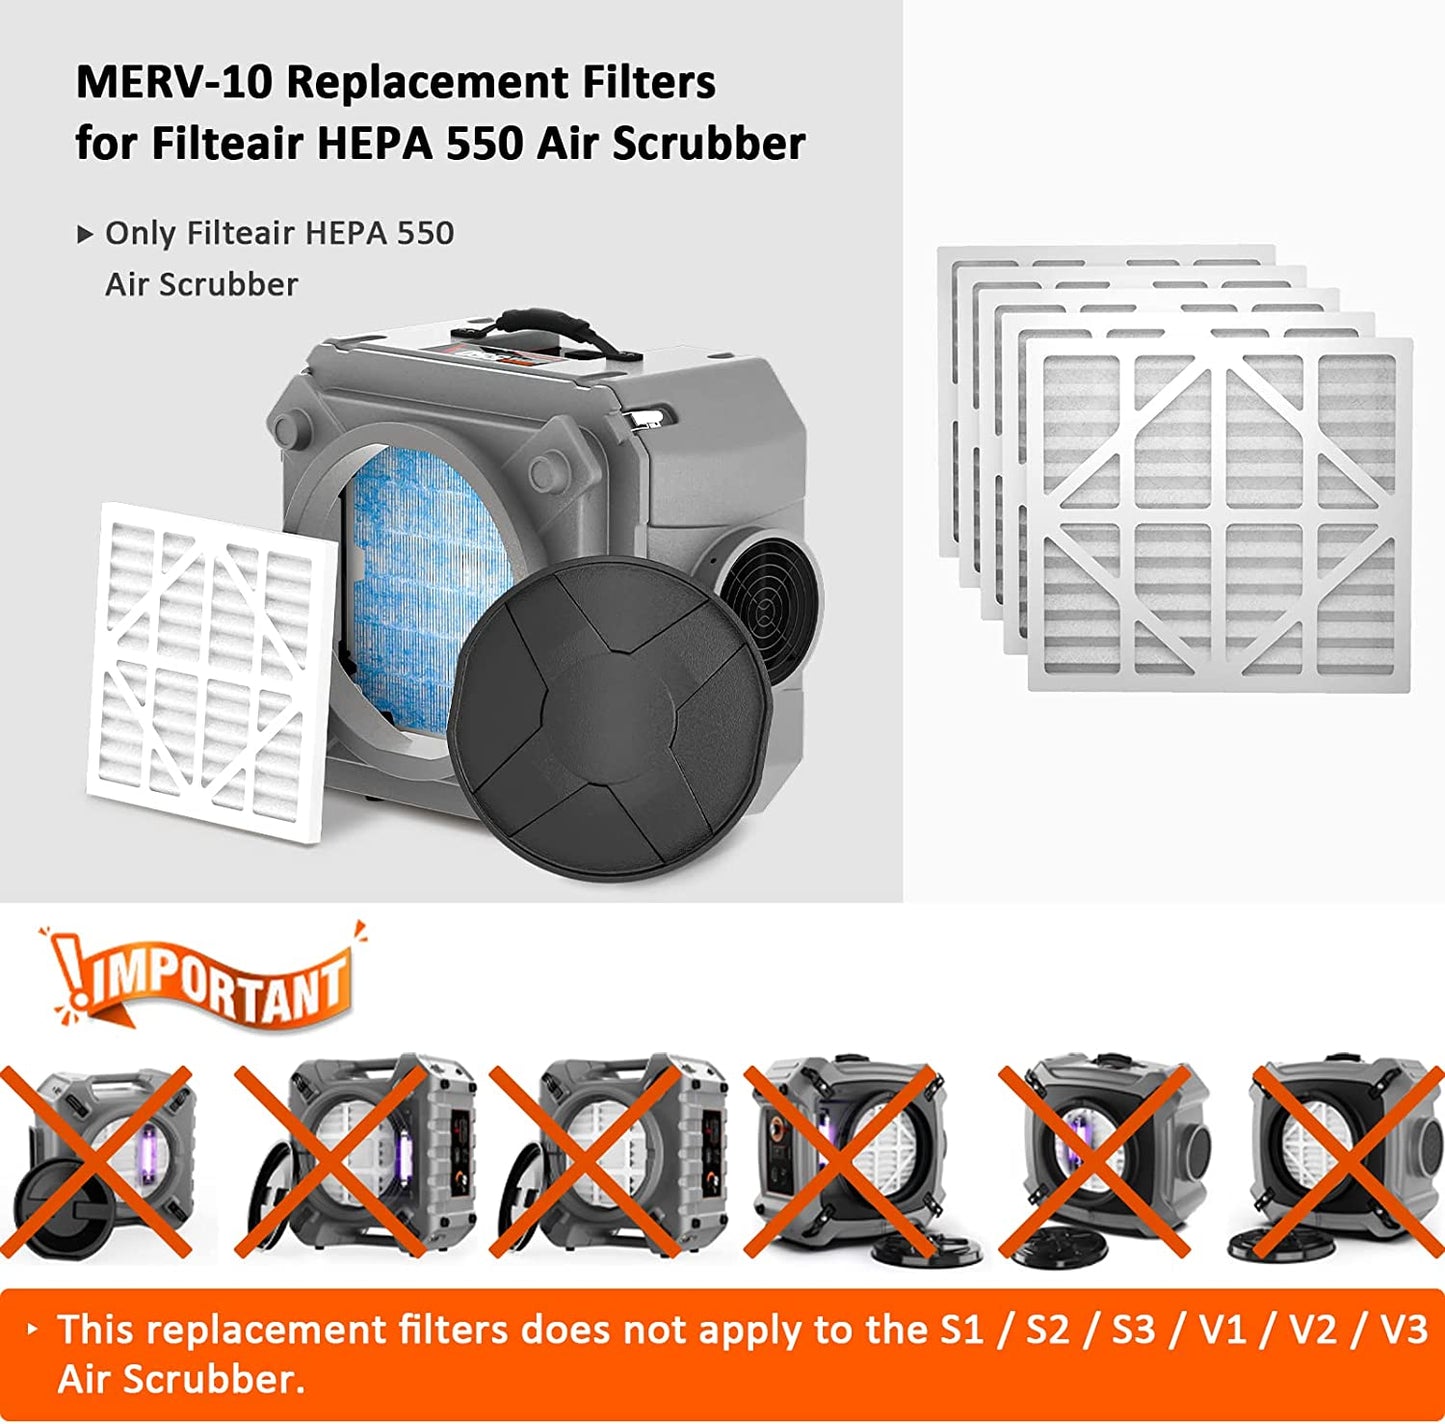 Abestorm MERV-10 Filter 5 Pack for Filterair HEPA 550